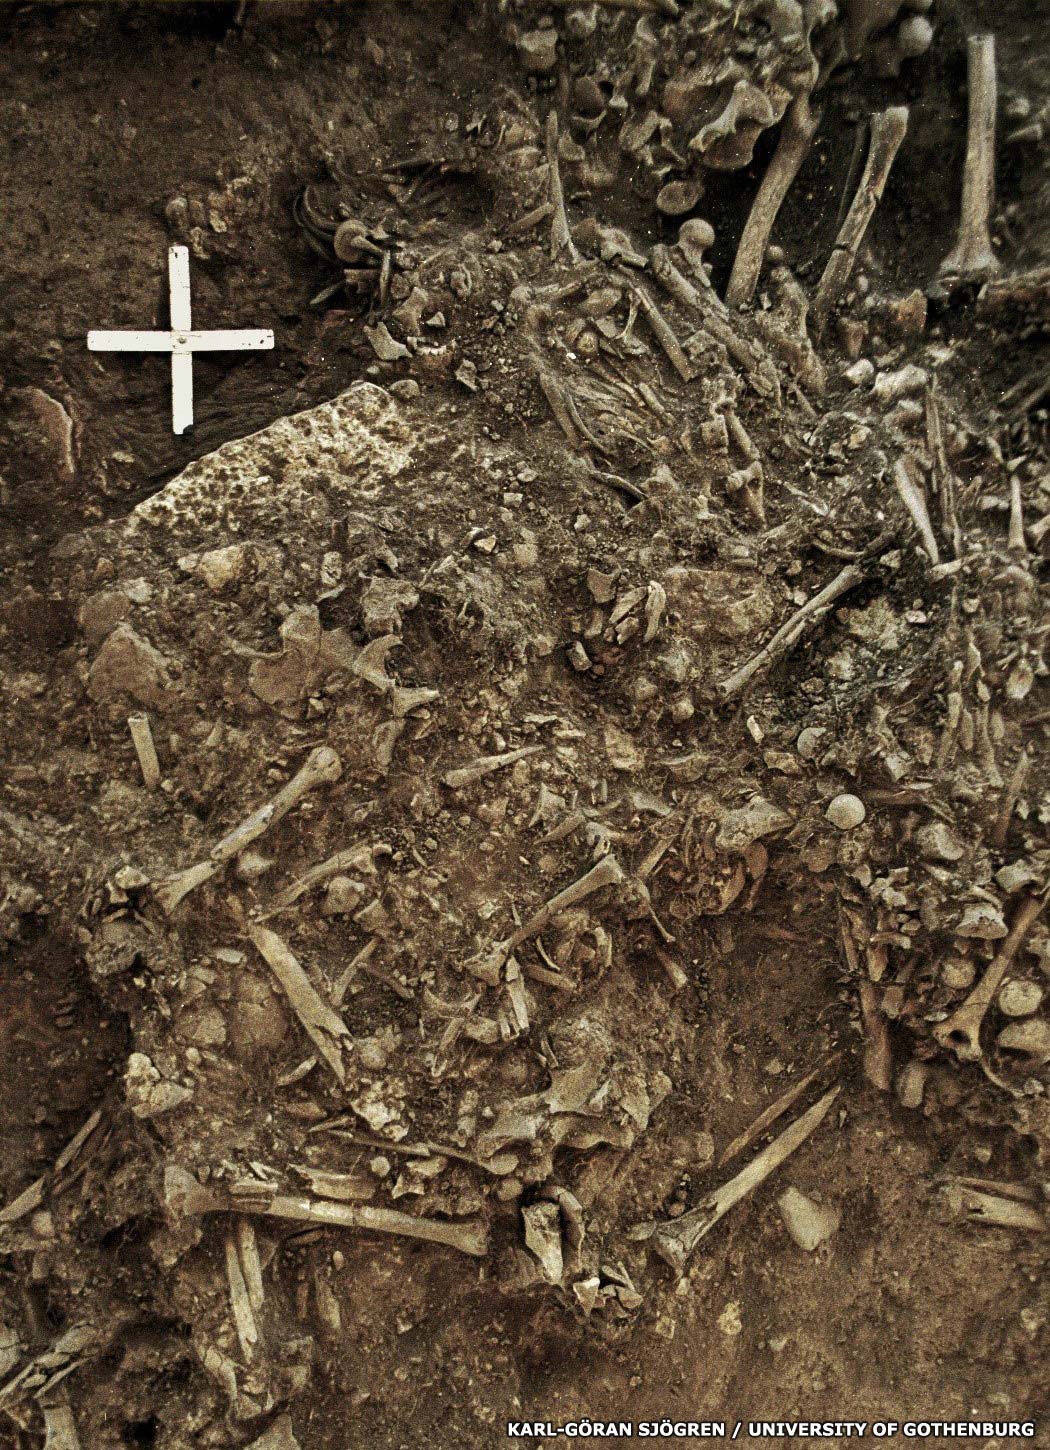 Neolithic plague victim